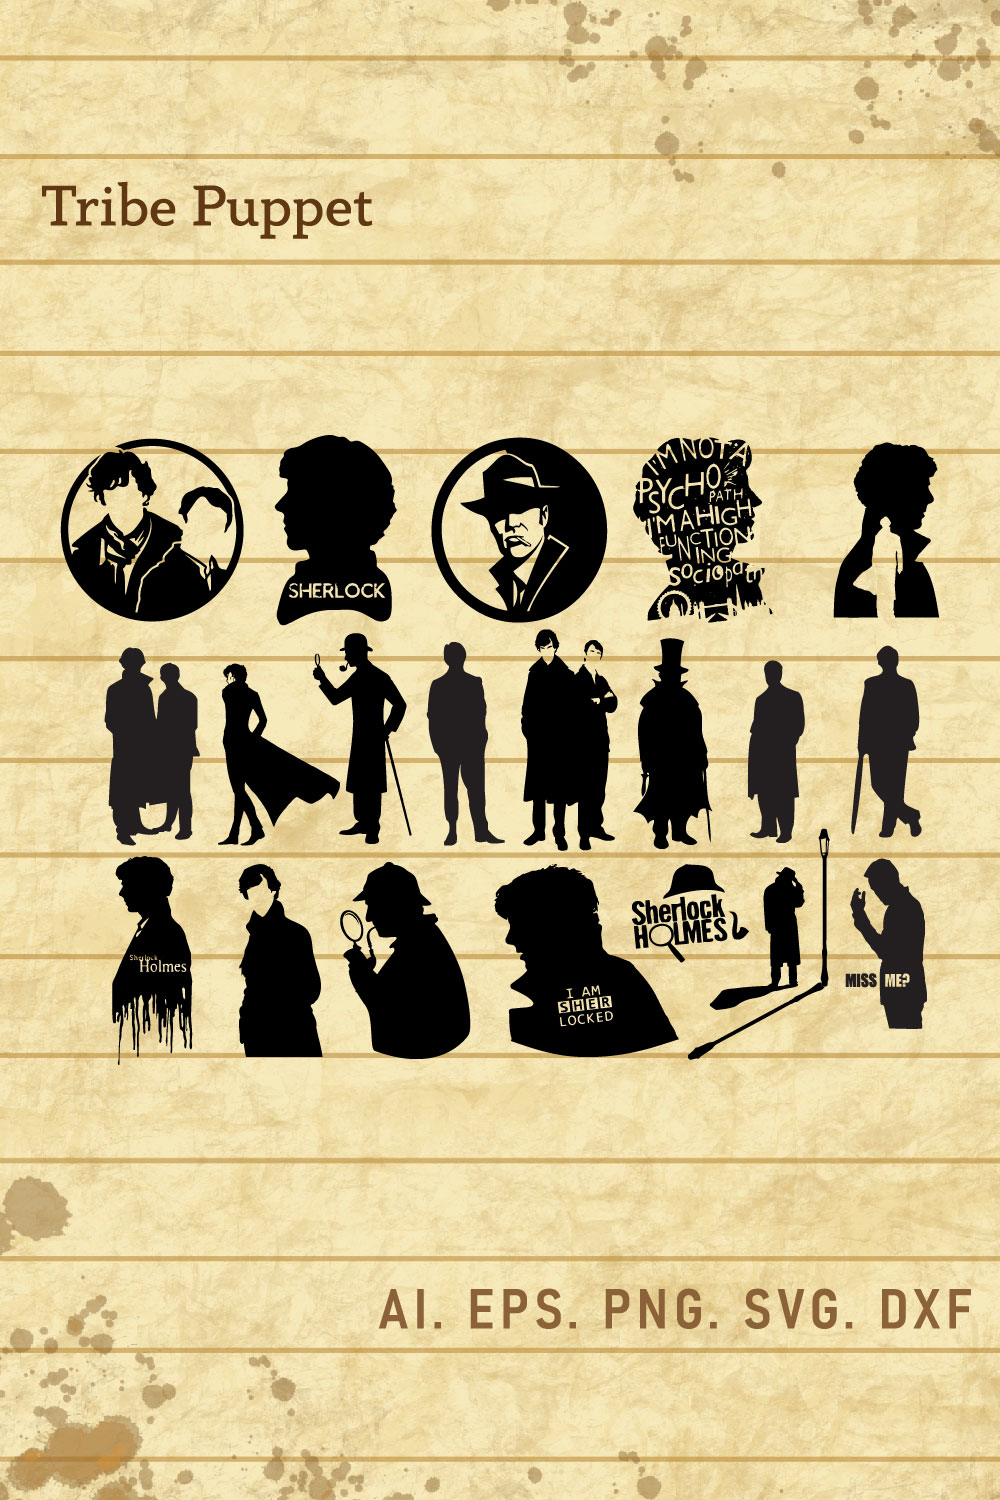 Sherlock Holmes SVG pinterest preview image.